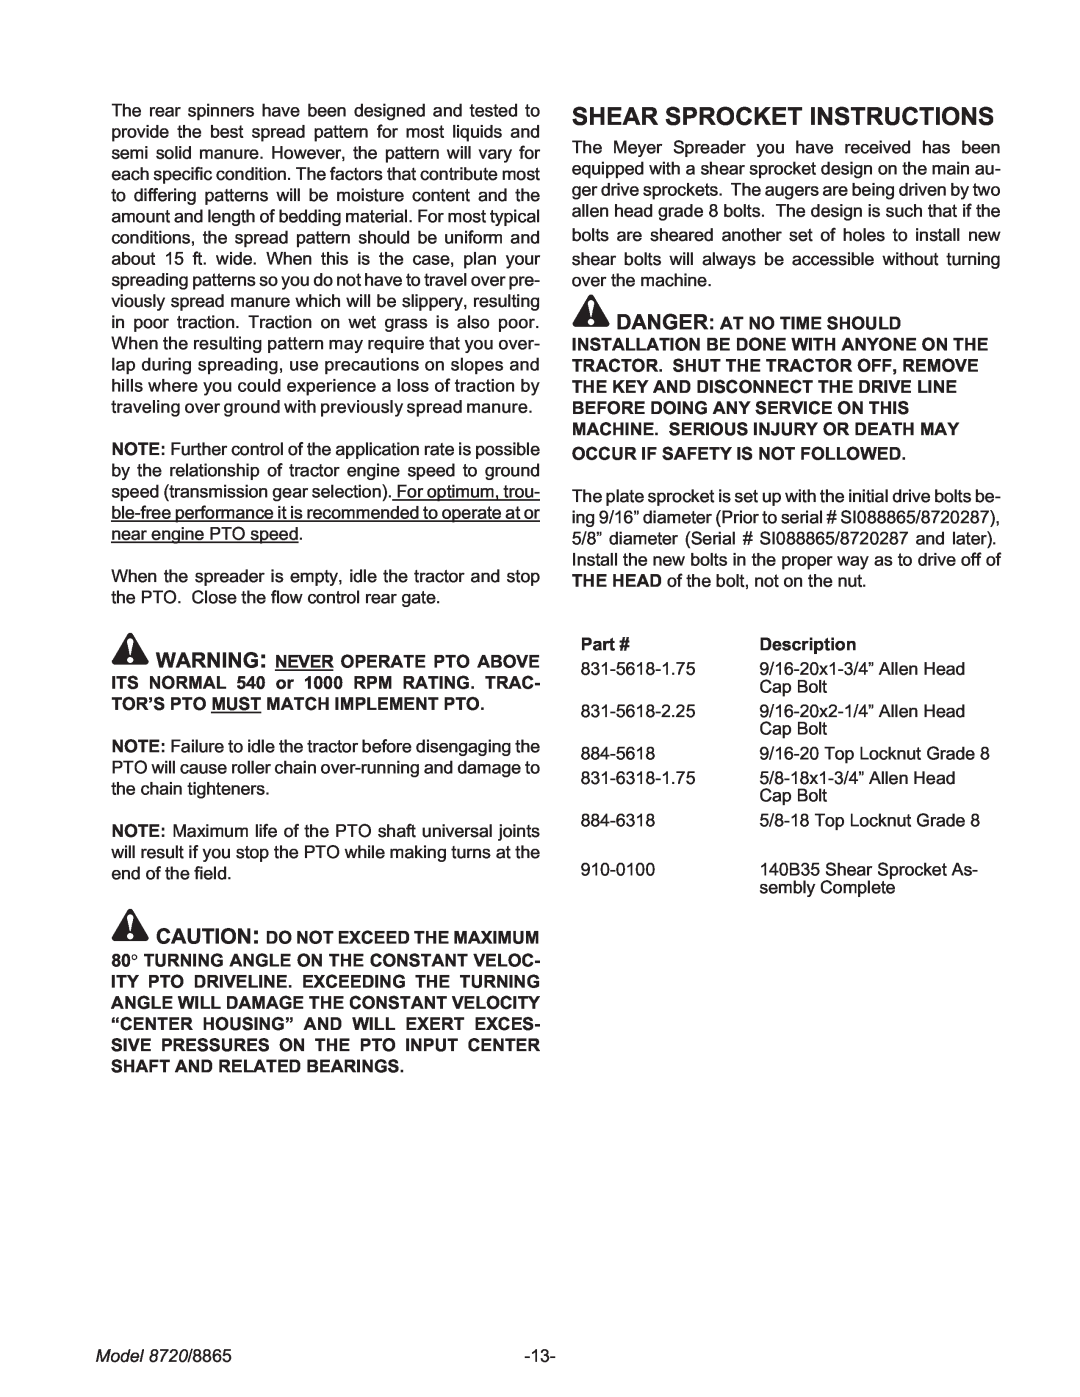 Meyer manual Shear Sprocket Instructions, Model 8720/8865 